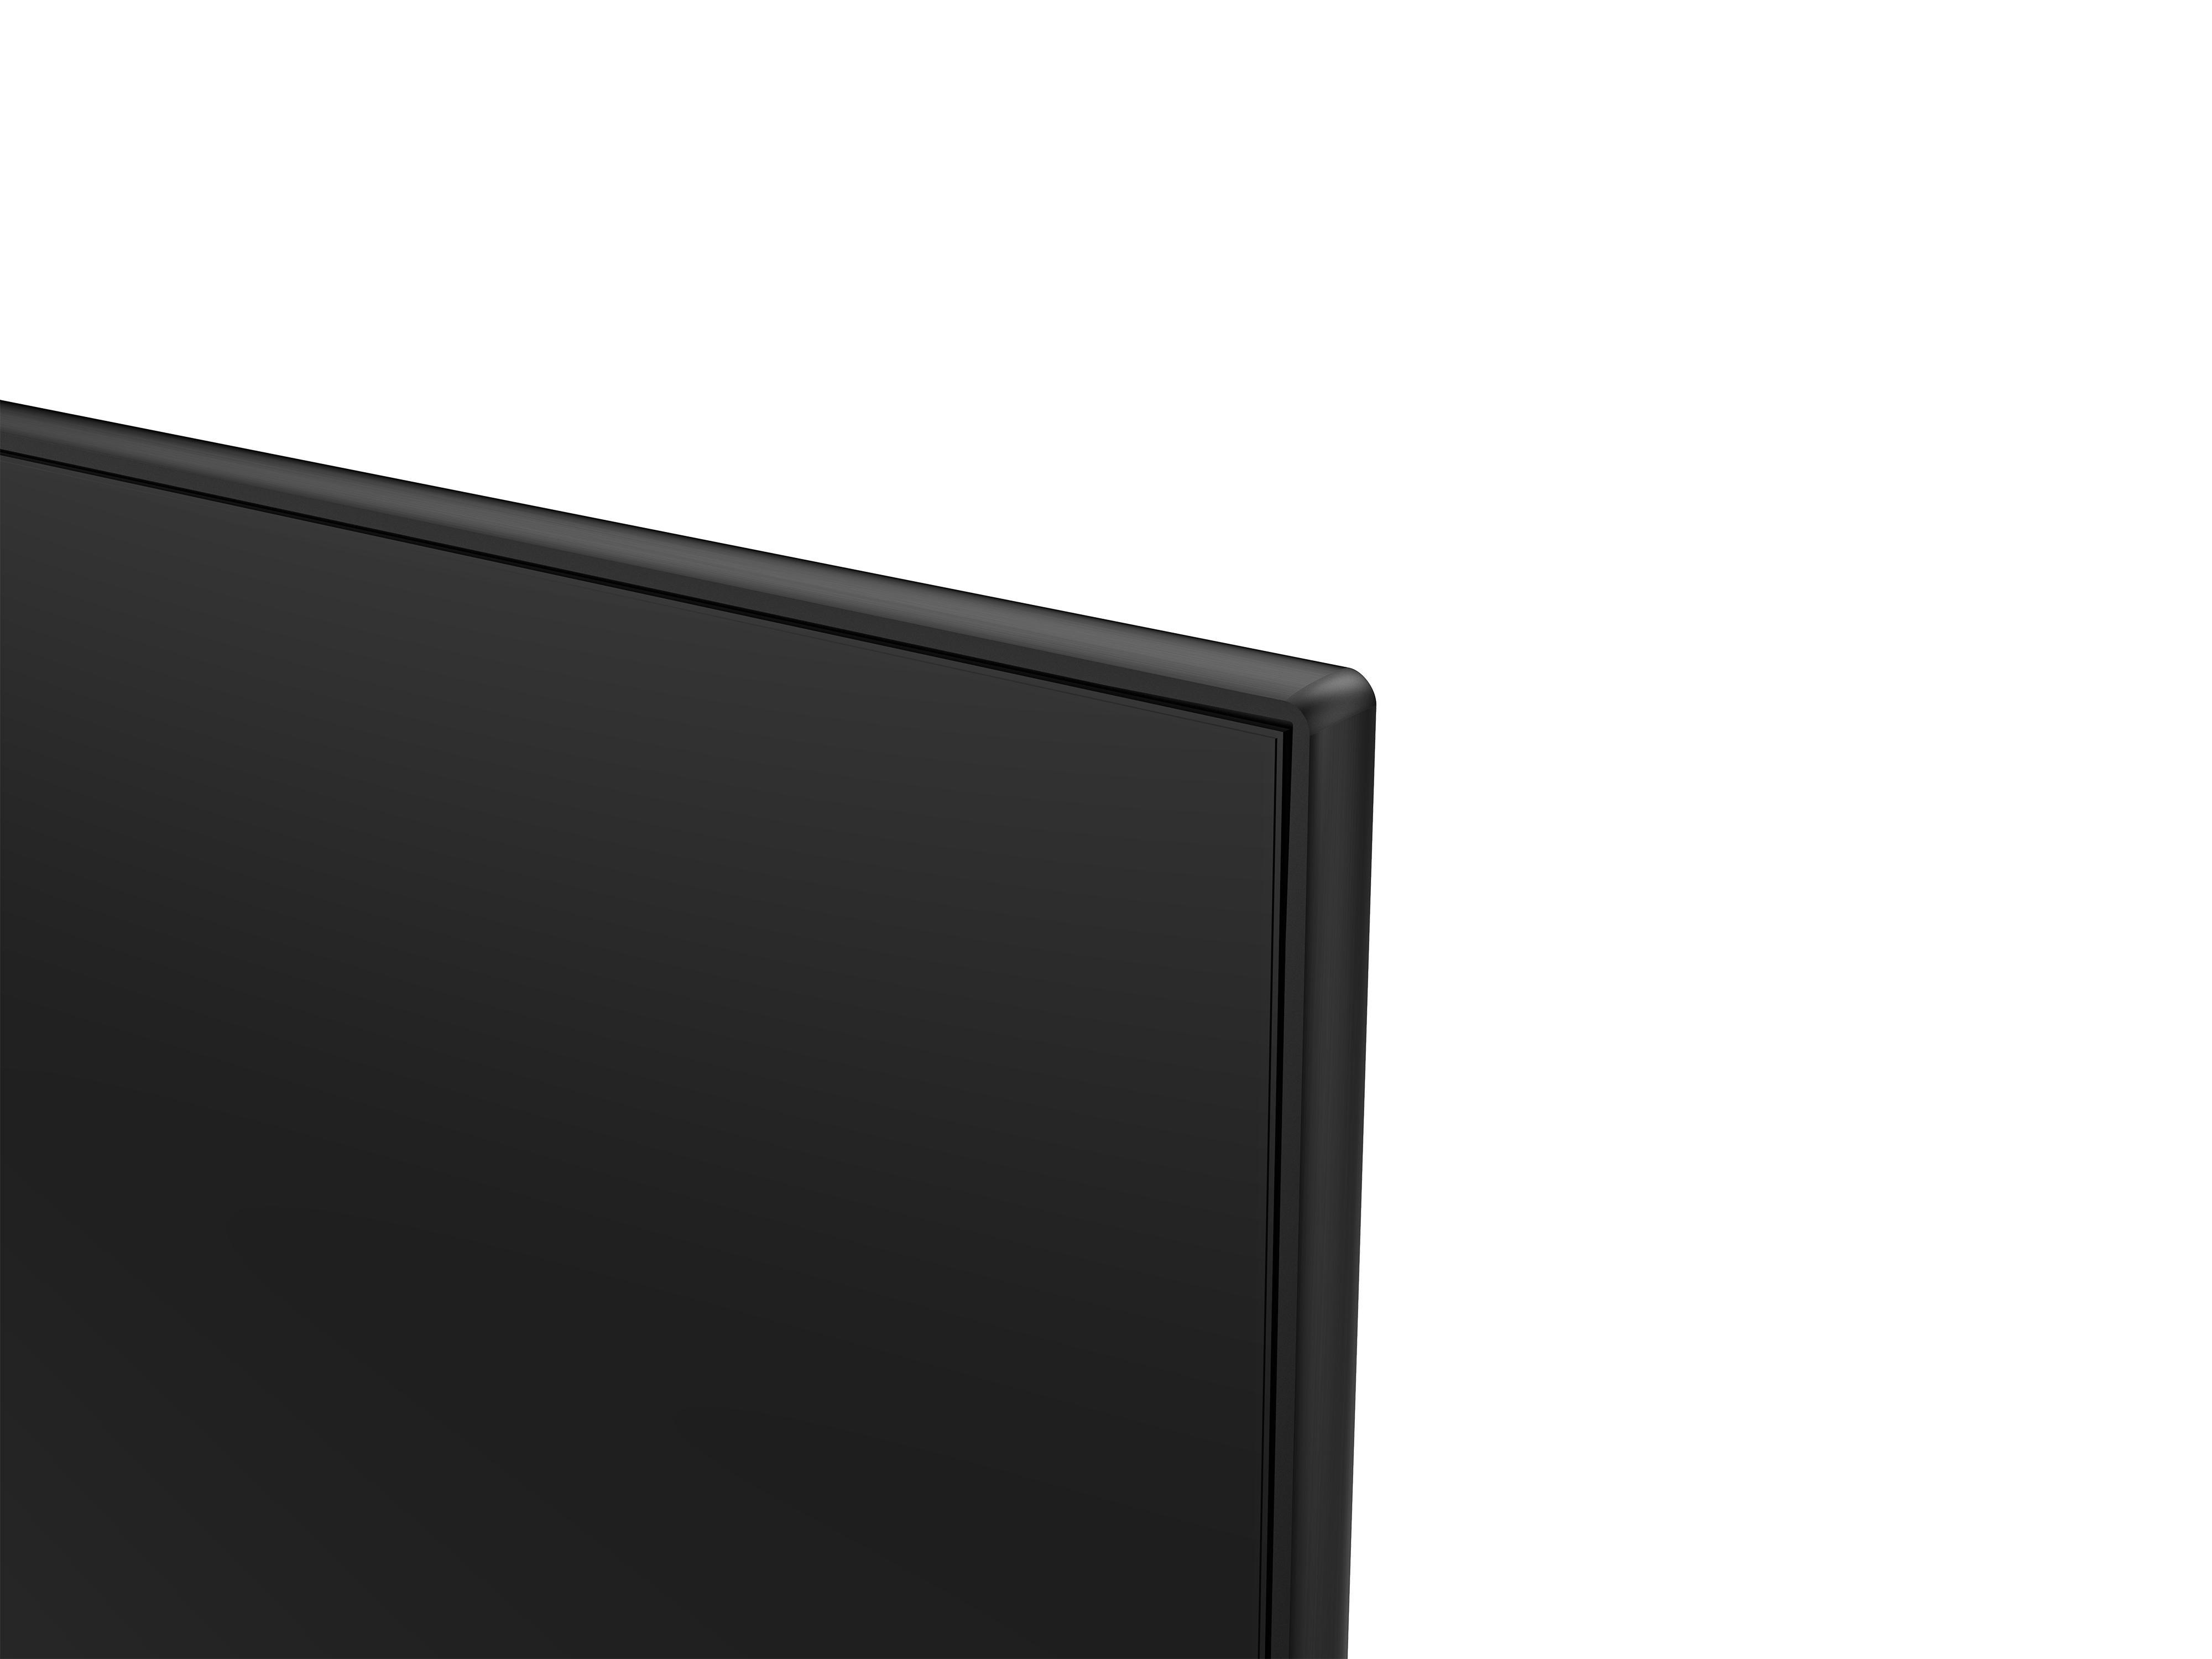 HISENSE 43A79GQ QLED TV (Flat, SMART TV, 4K, VIDAA UHD U5) 43 / cm, 109 Zoll